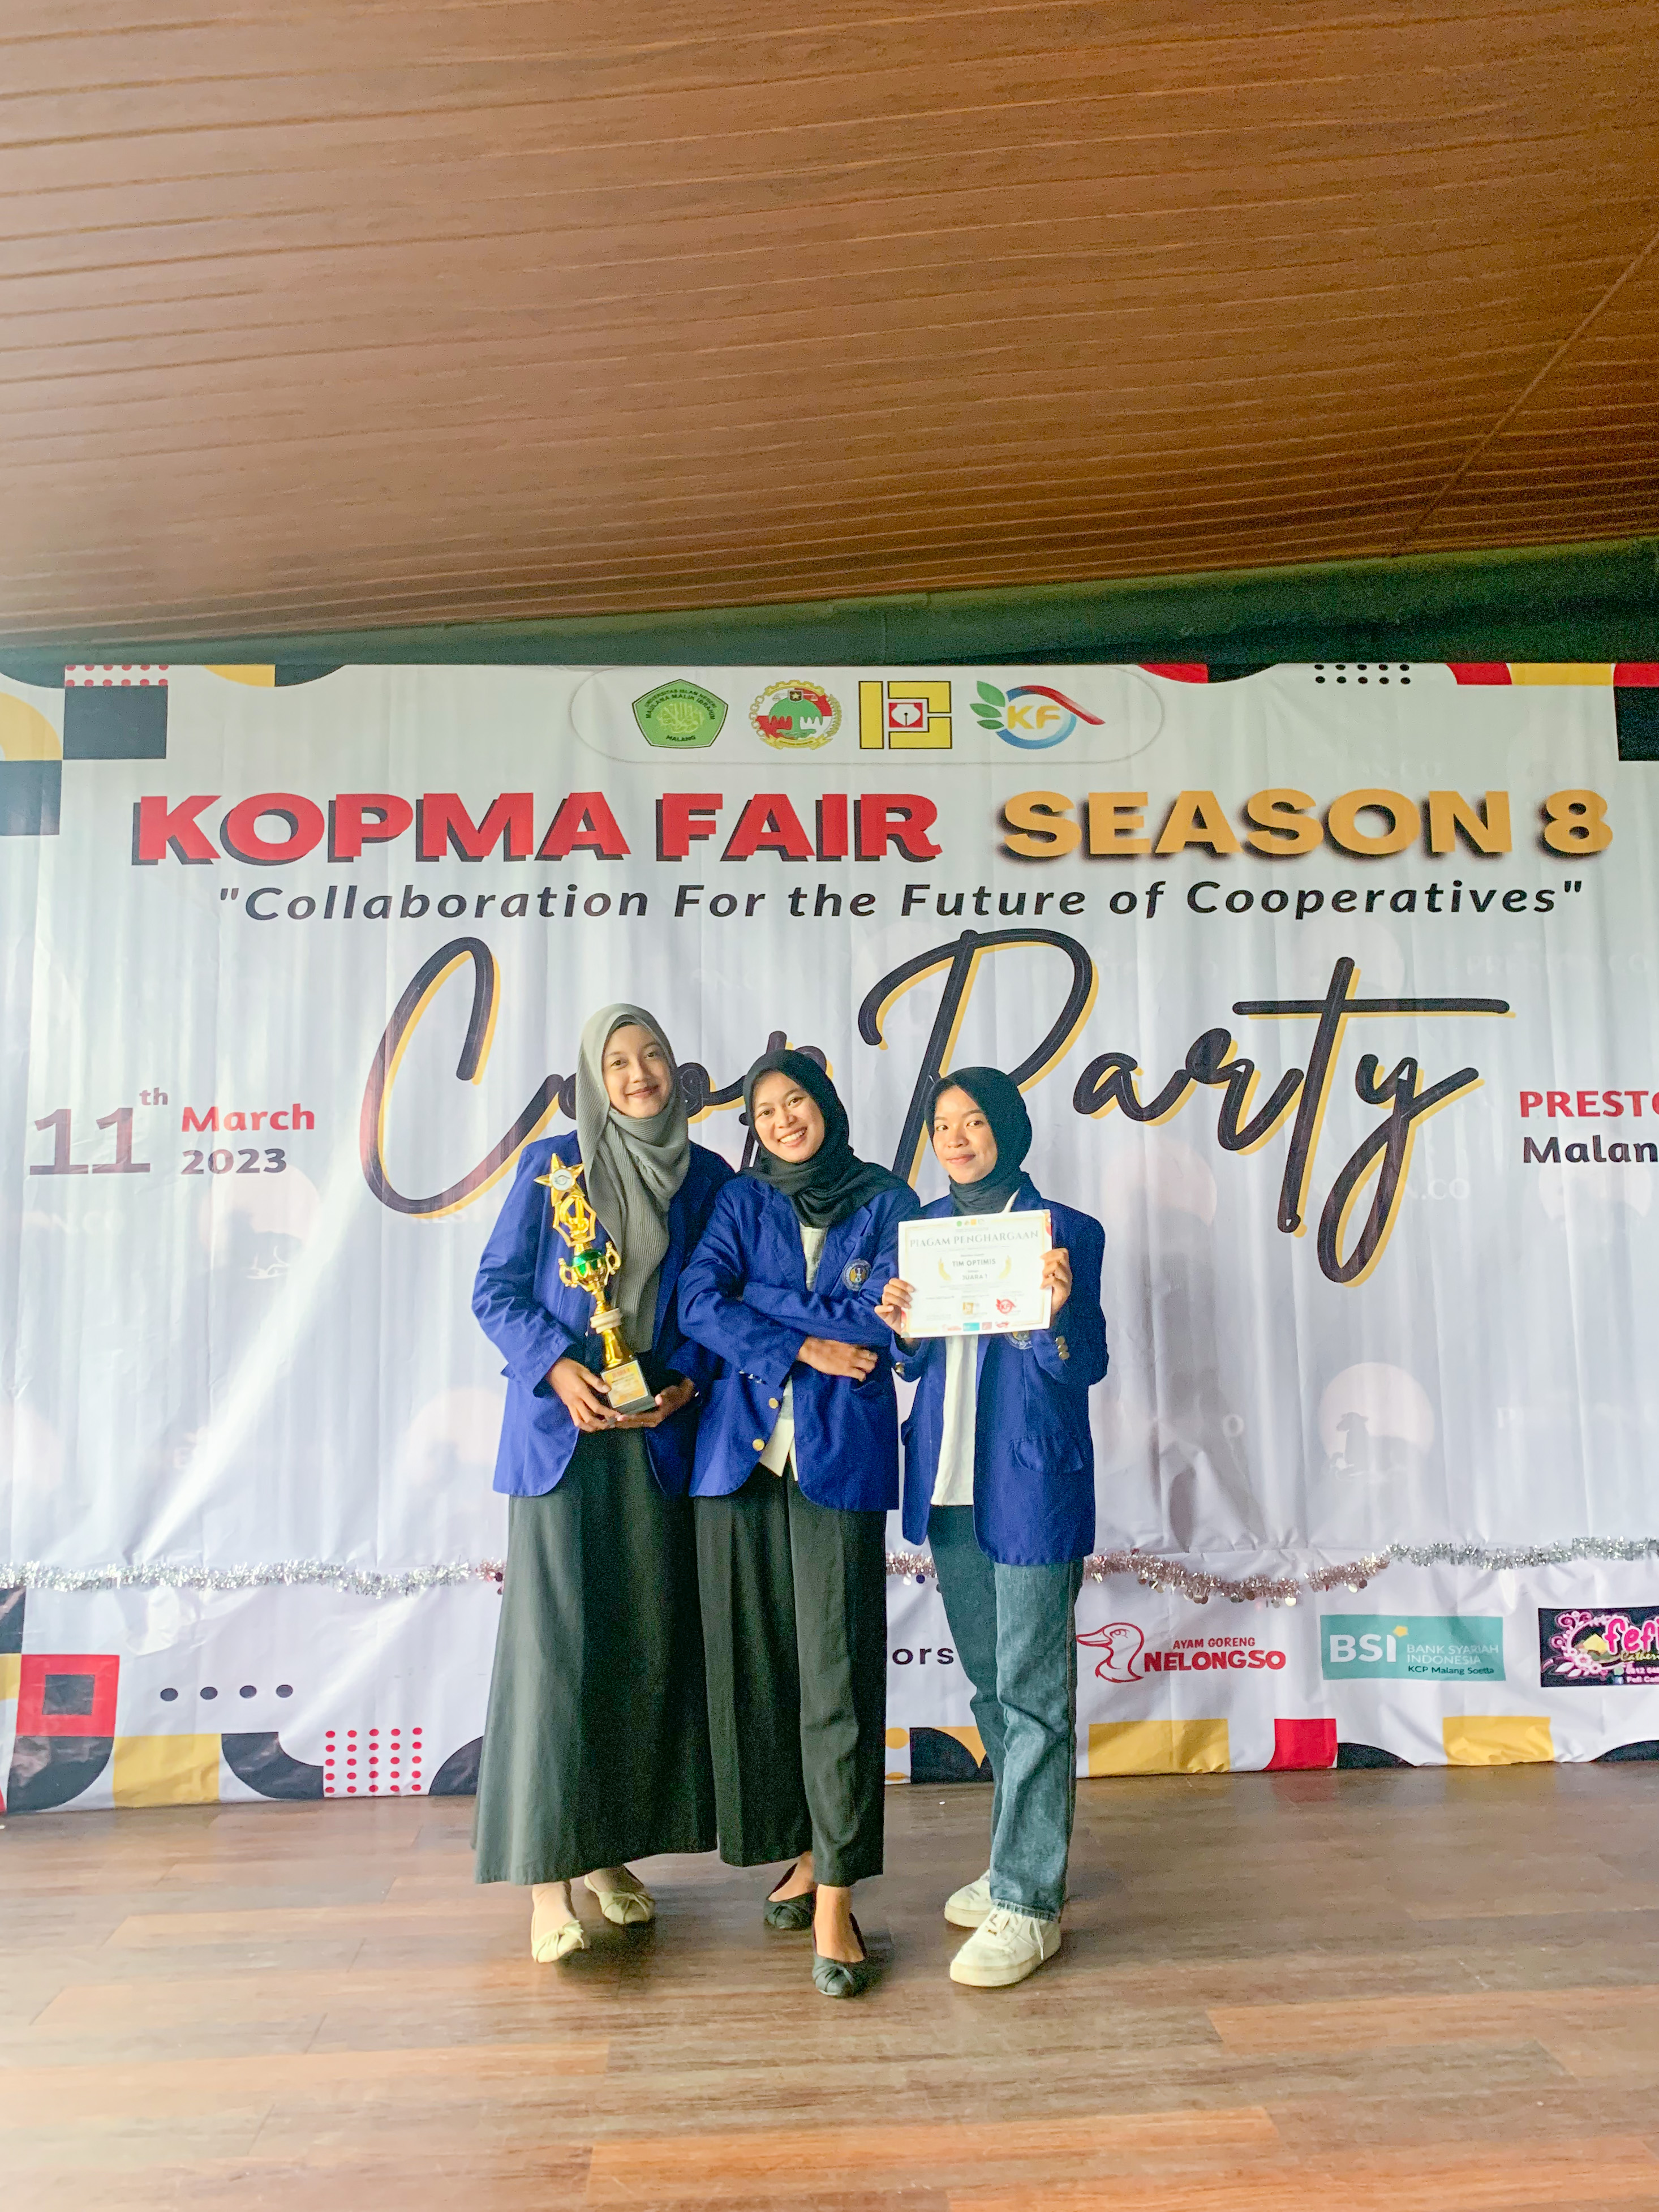 Foto Business Case Competition Kopma Fair Season 8